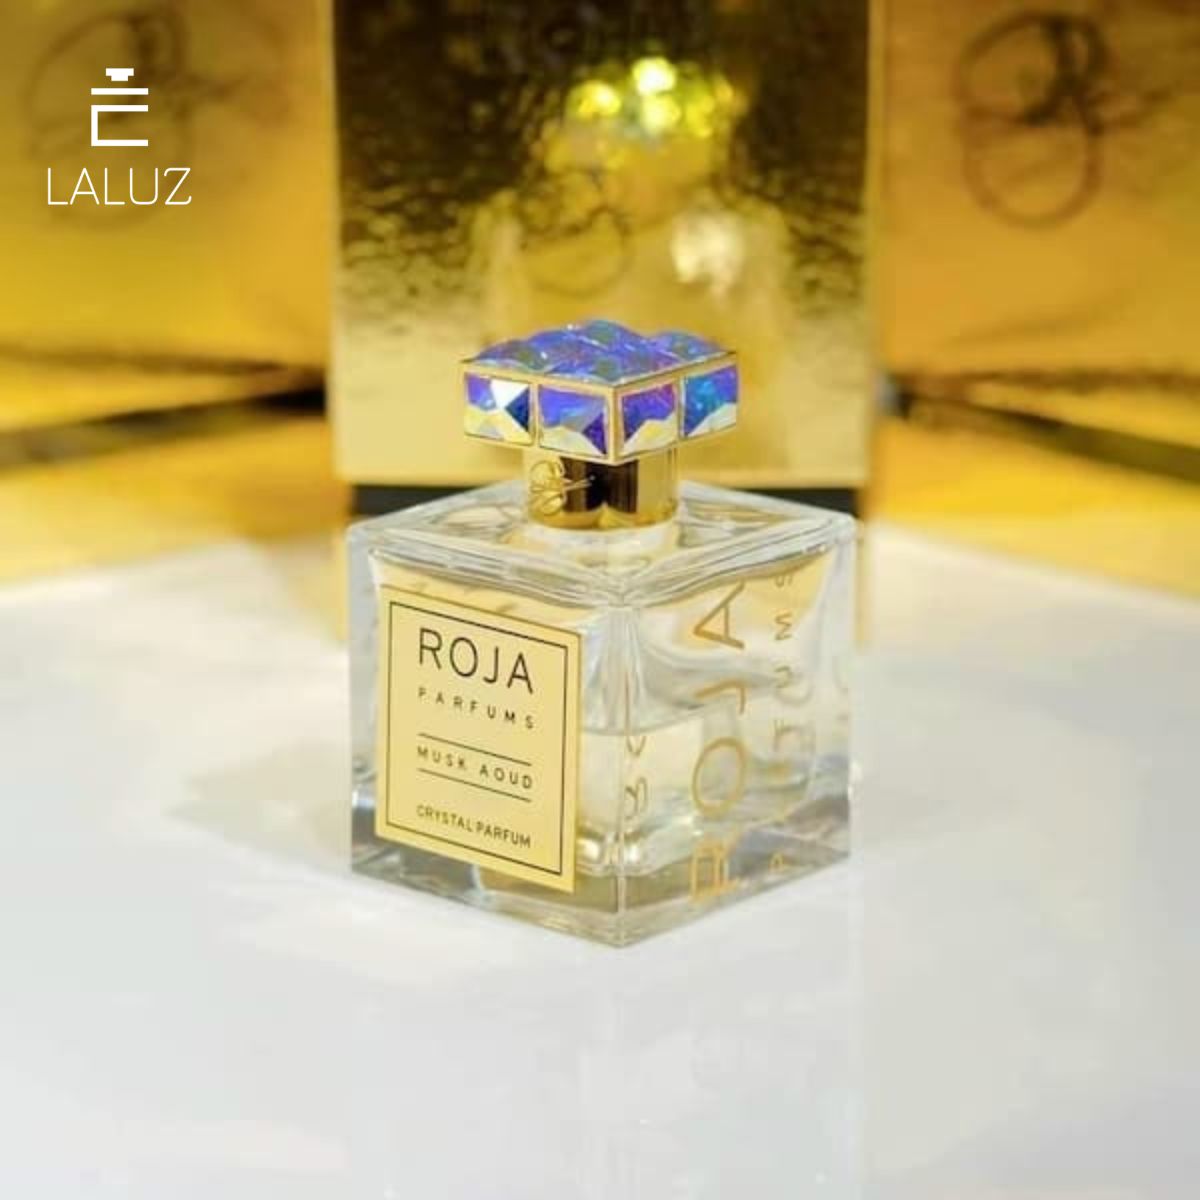 Đánh giá nước hoa Roja Parfums Musk Aoud Crystal Parfum